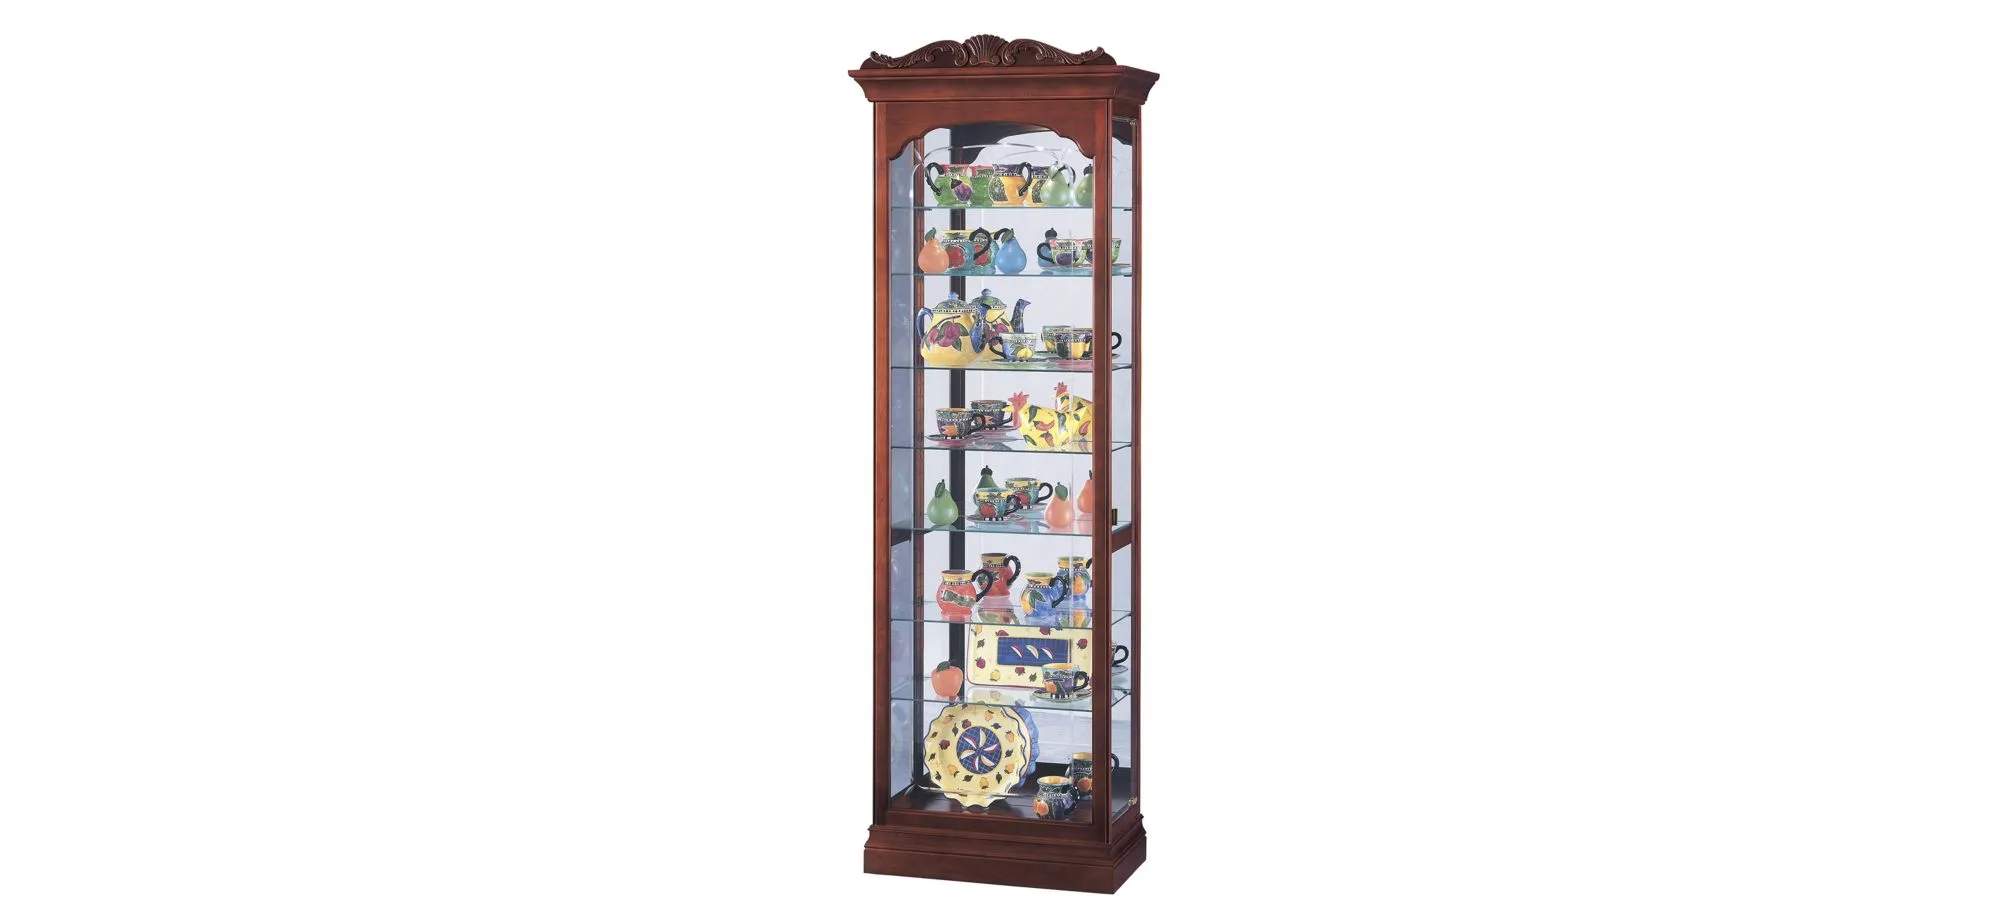 Hastings Curio Cabinet in Windsor Cherry by Howard Miller Clock